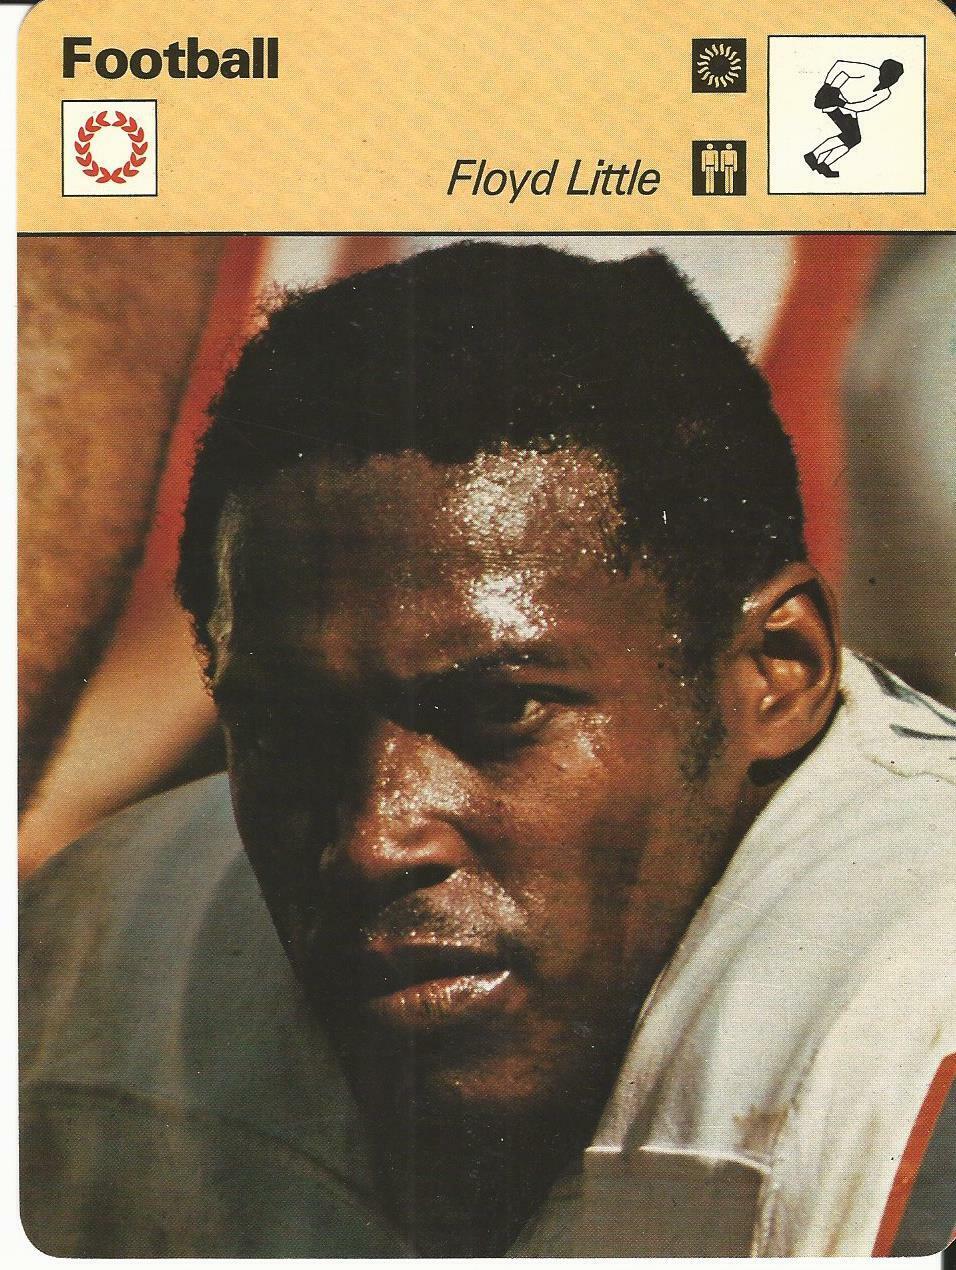 1977-79 Sportscaster Card, #64.19 Football, Floyd Little, Broncos